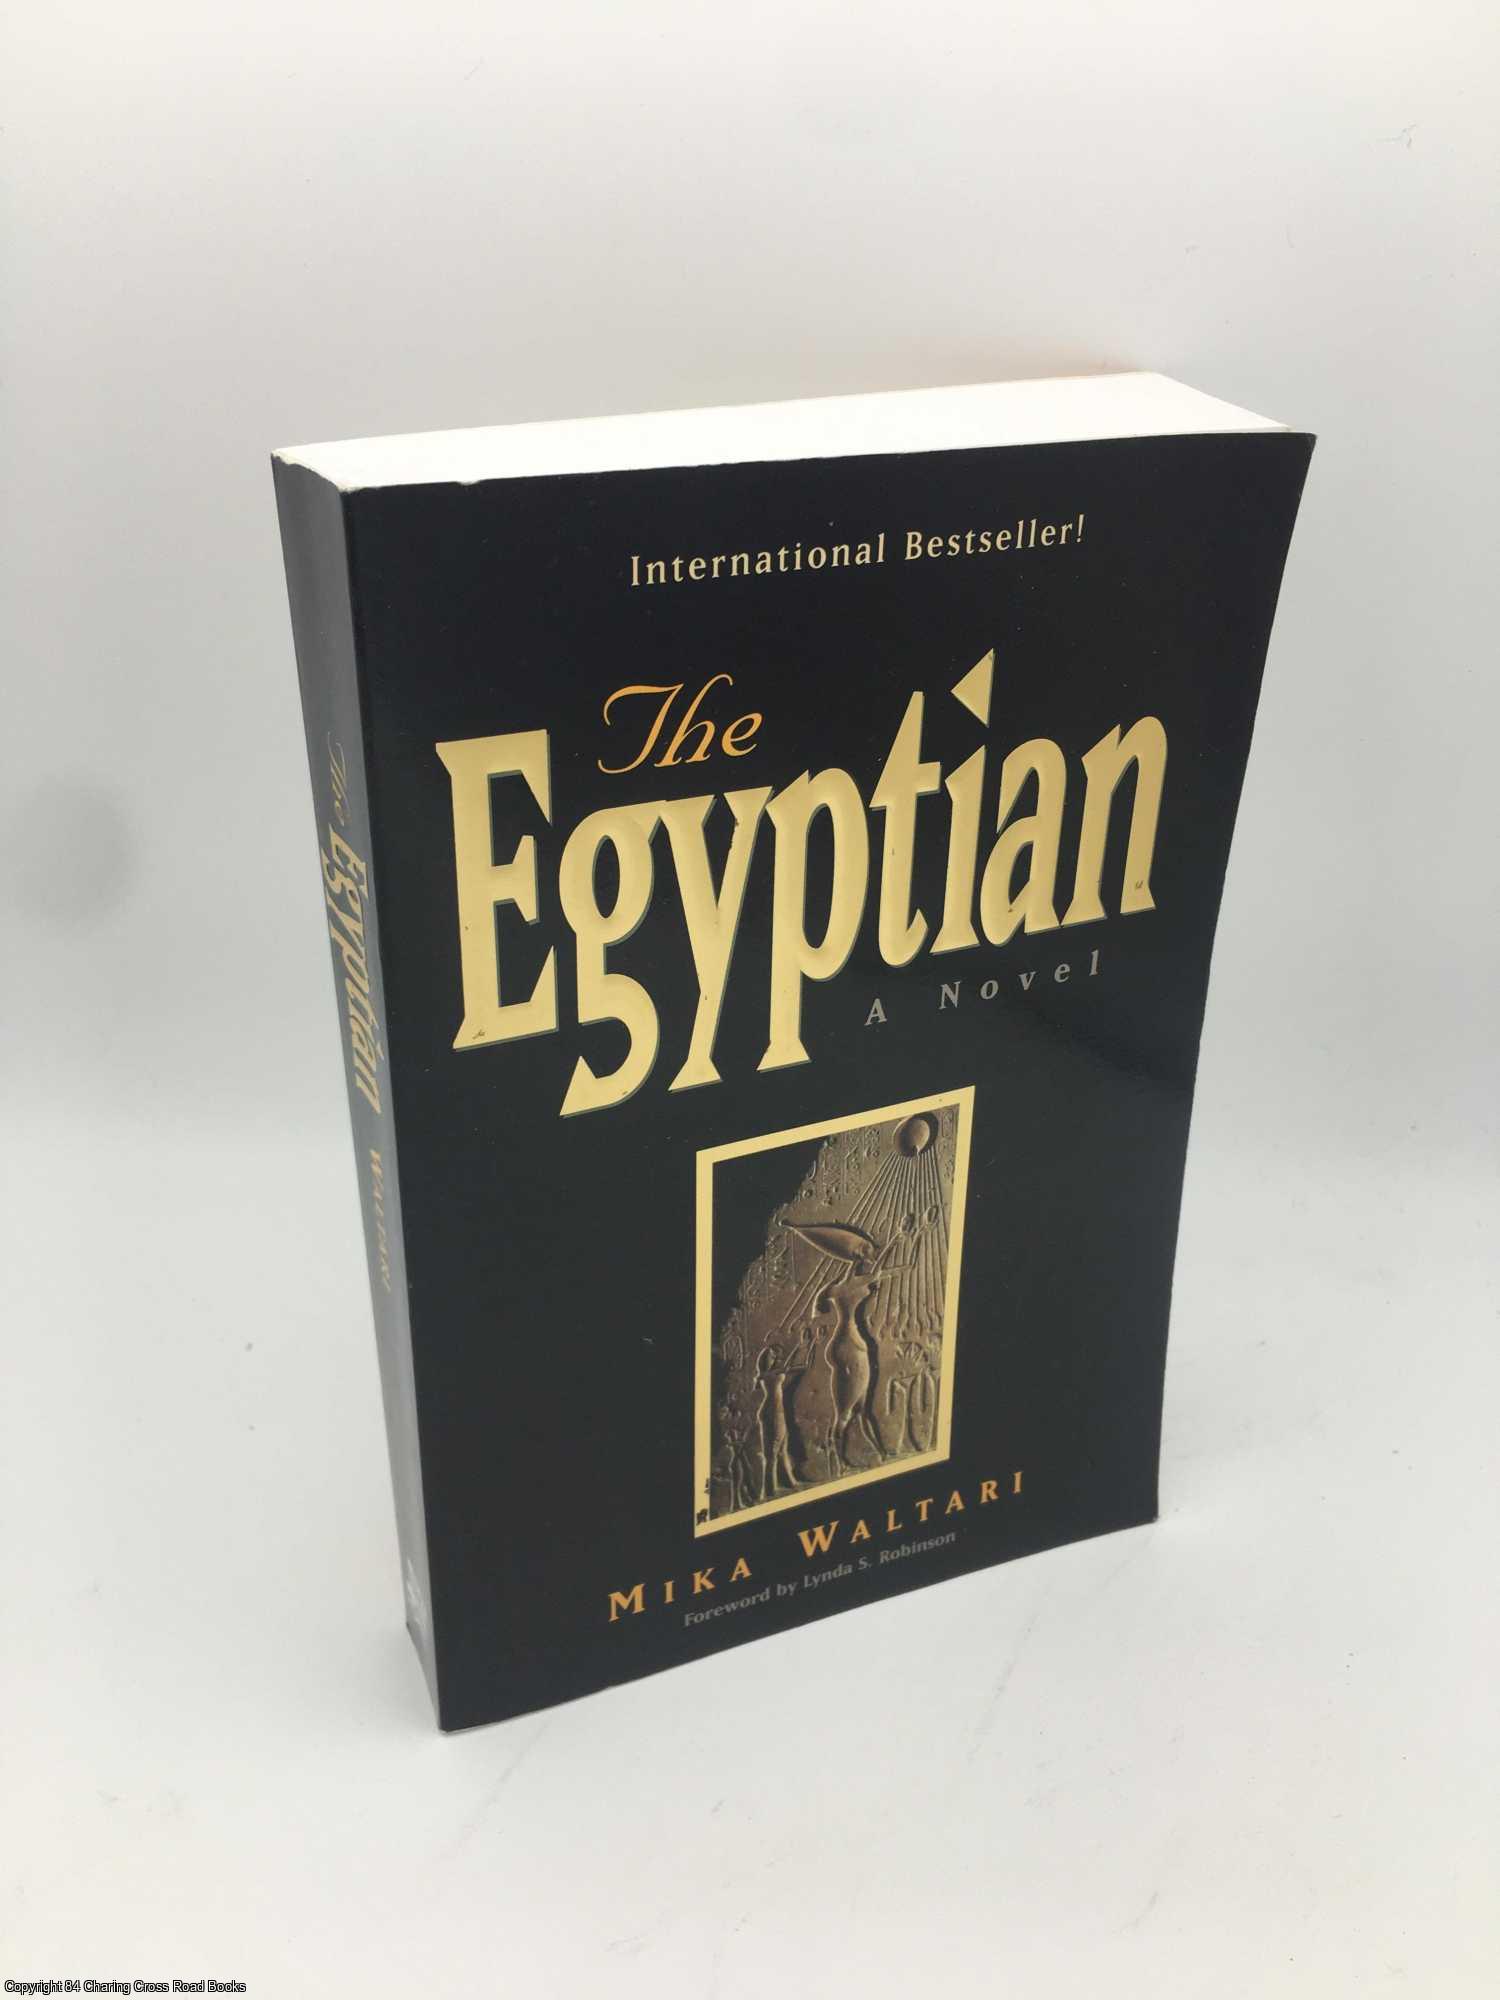 Waltari, Mika - The Egyptian: A Novel